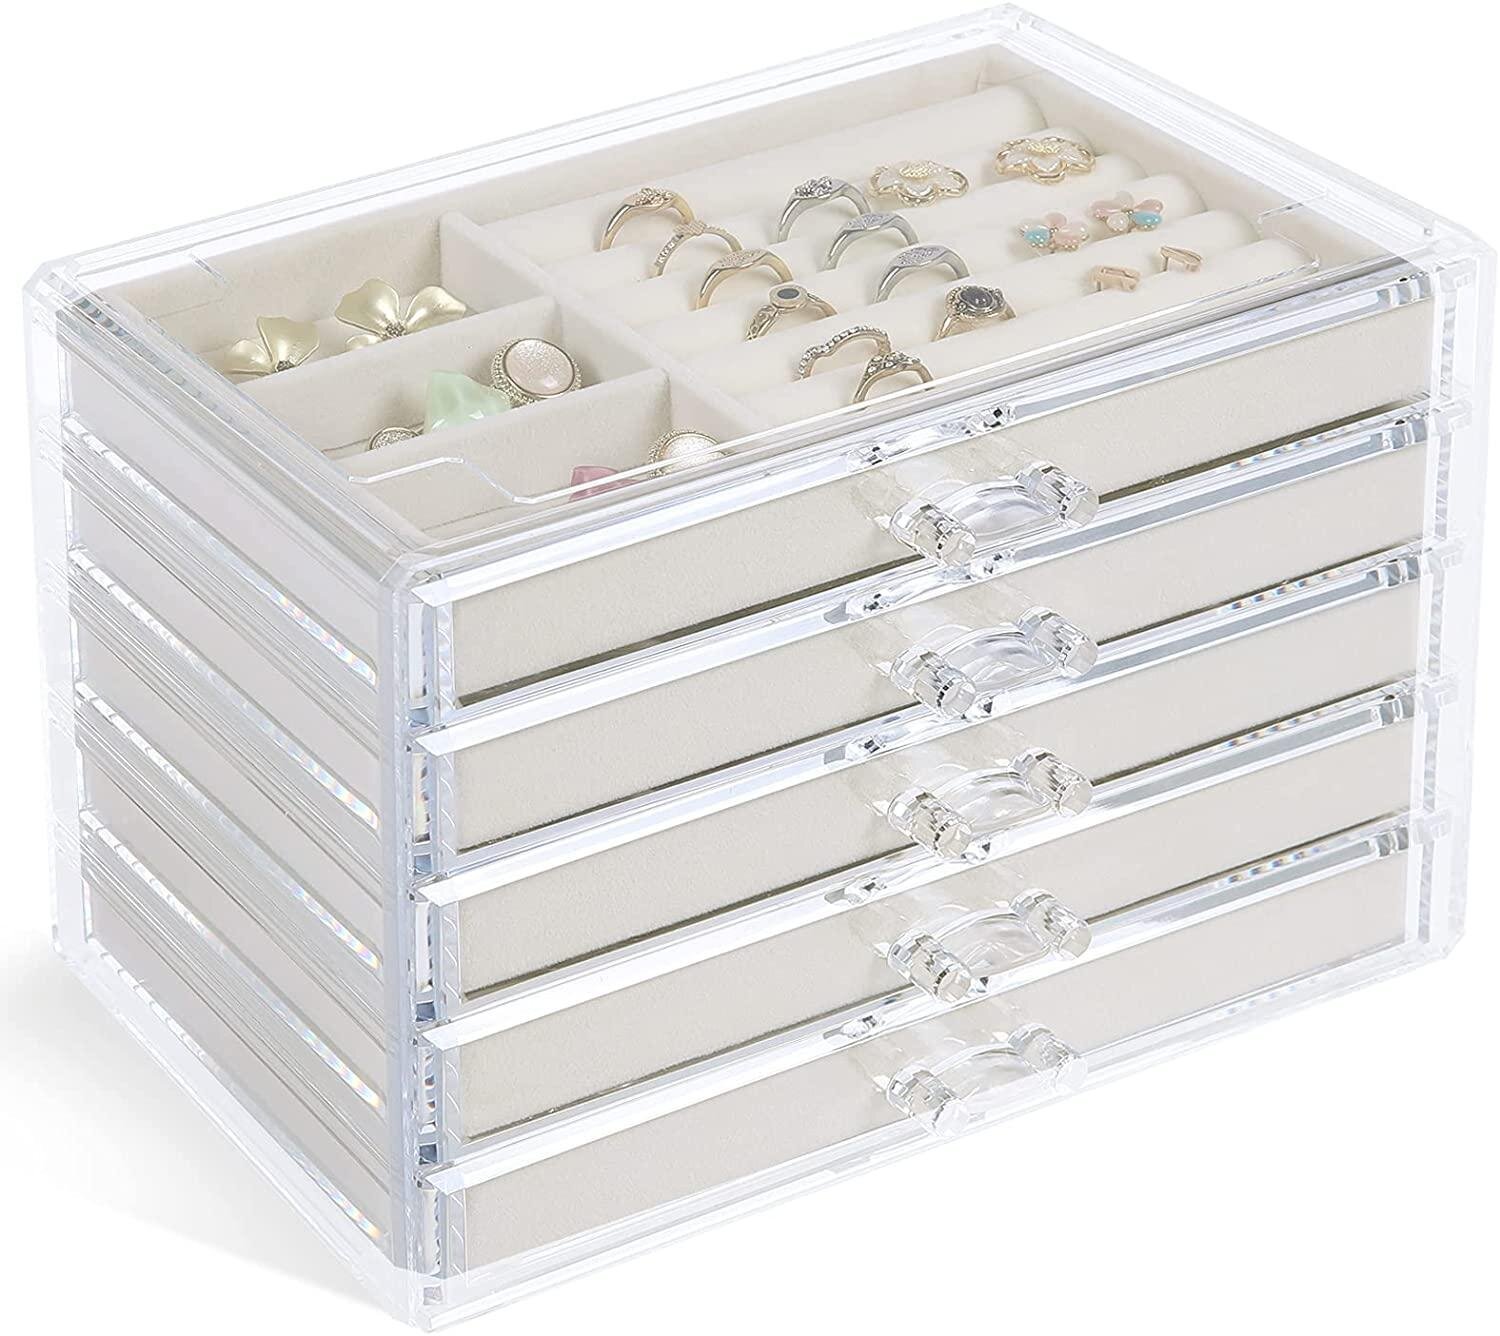 Plastic Compartment Jewelry Storage Box,Earrings Storage Case, Jewelry  Organizer Box